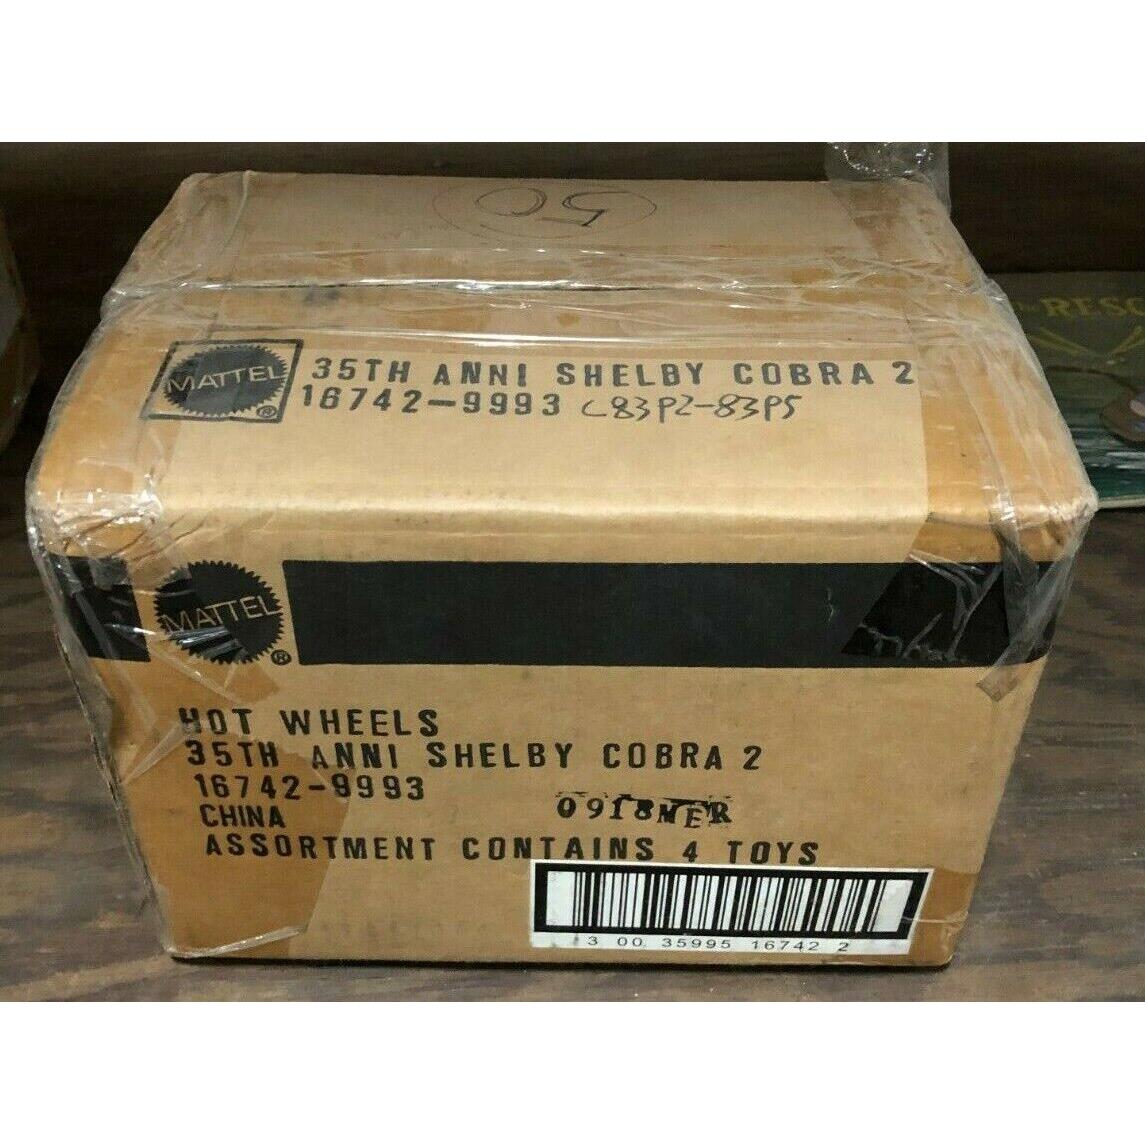 Mattel Factory Case Of 4 Hot Wheels 35th Anniversary Shelby Cobra 2 16742-9993